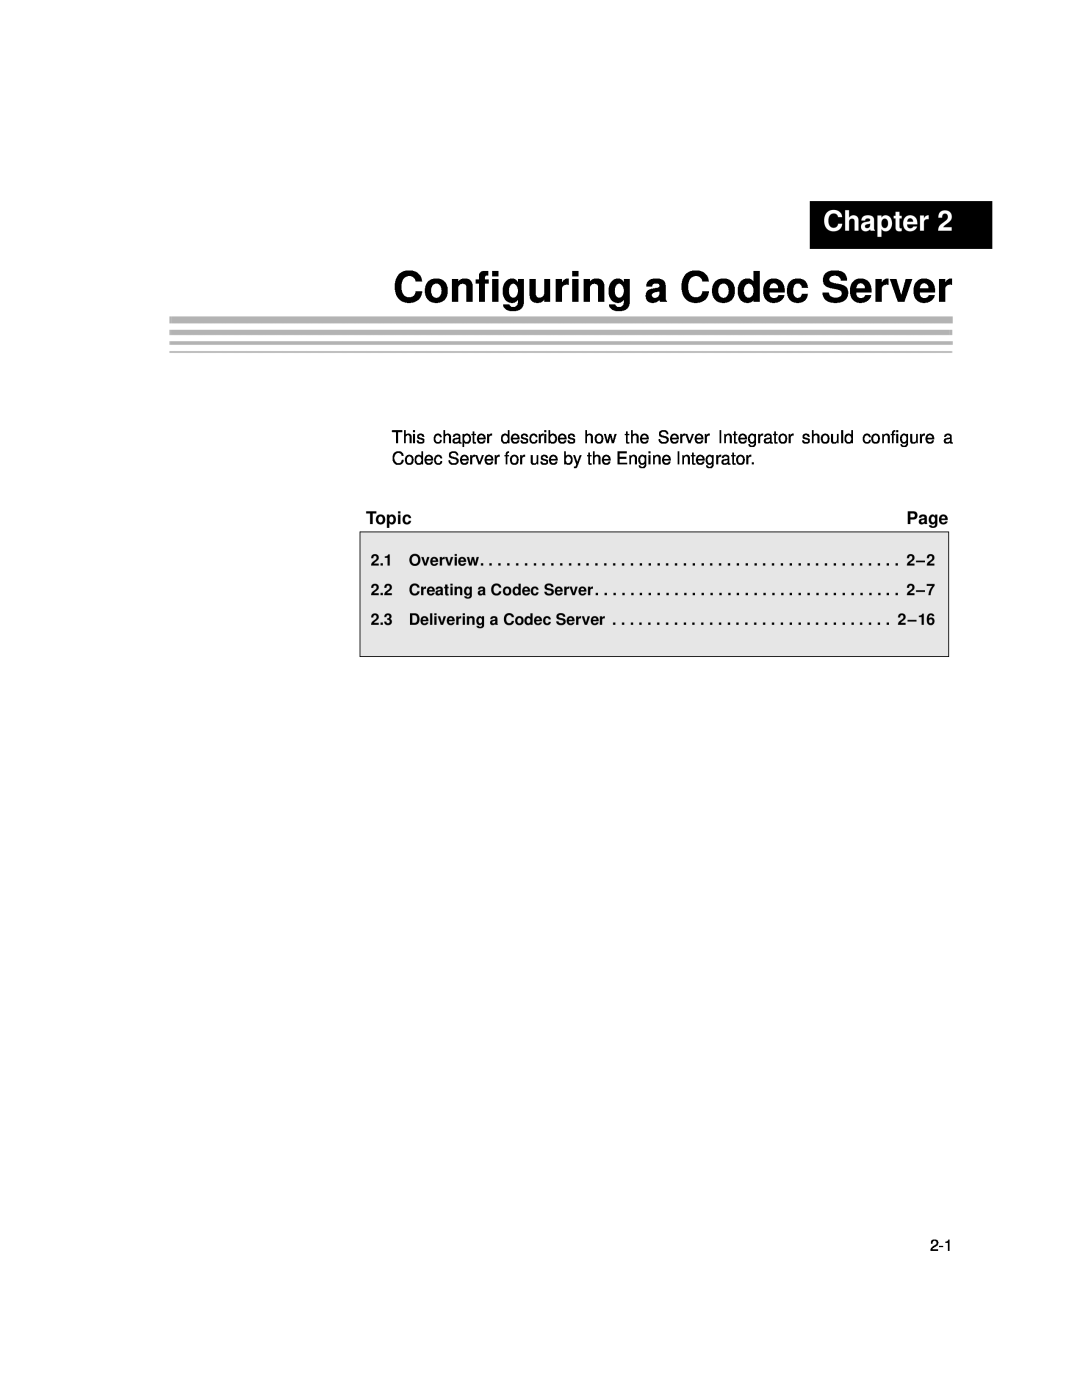 Texas Instruments Codec Engine Server manual Configuring a Codec Server, Chapter, Overview, Creating a Codec Server, 2-16 